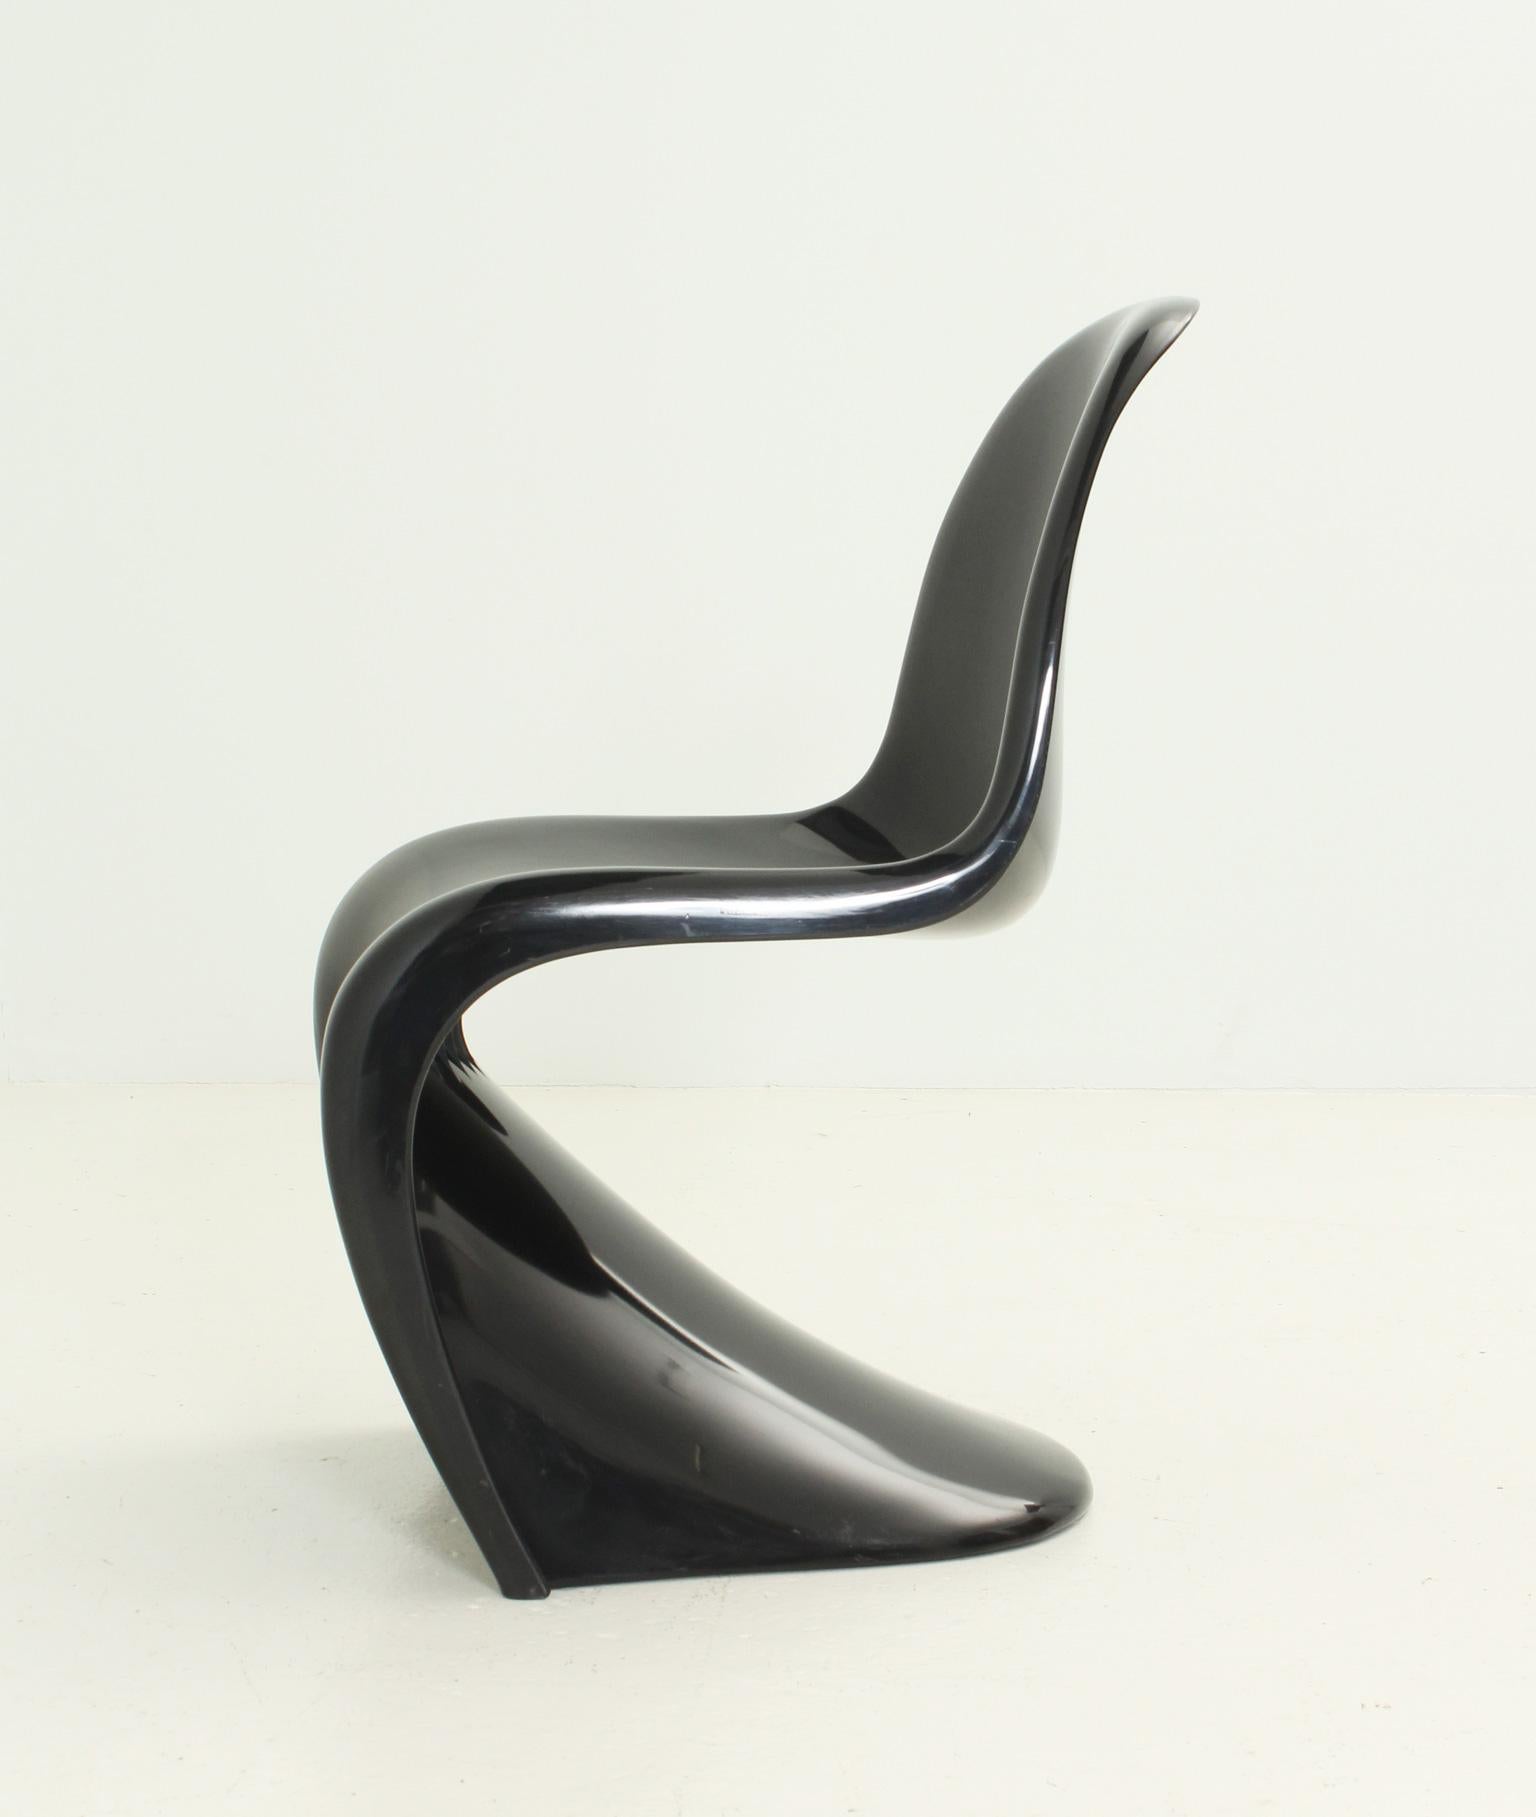 Late 20th Century Side Chair by Verner Panton for Herman Miller - Felhbaum, 1971 For Sale